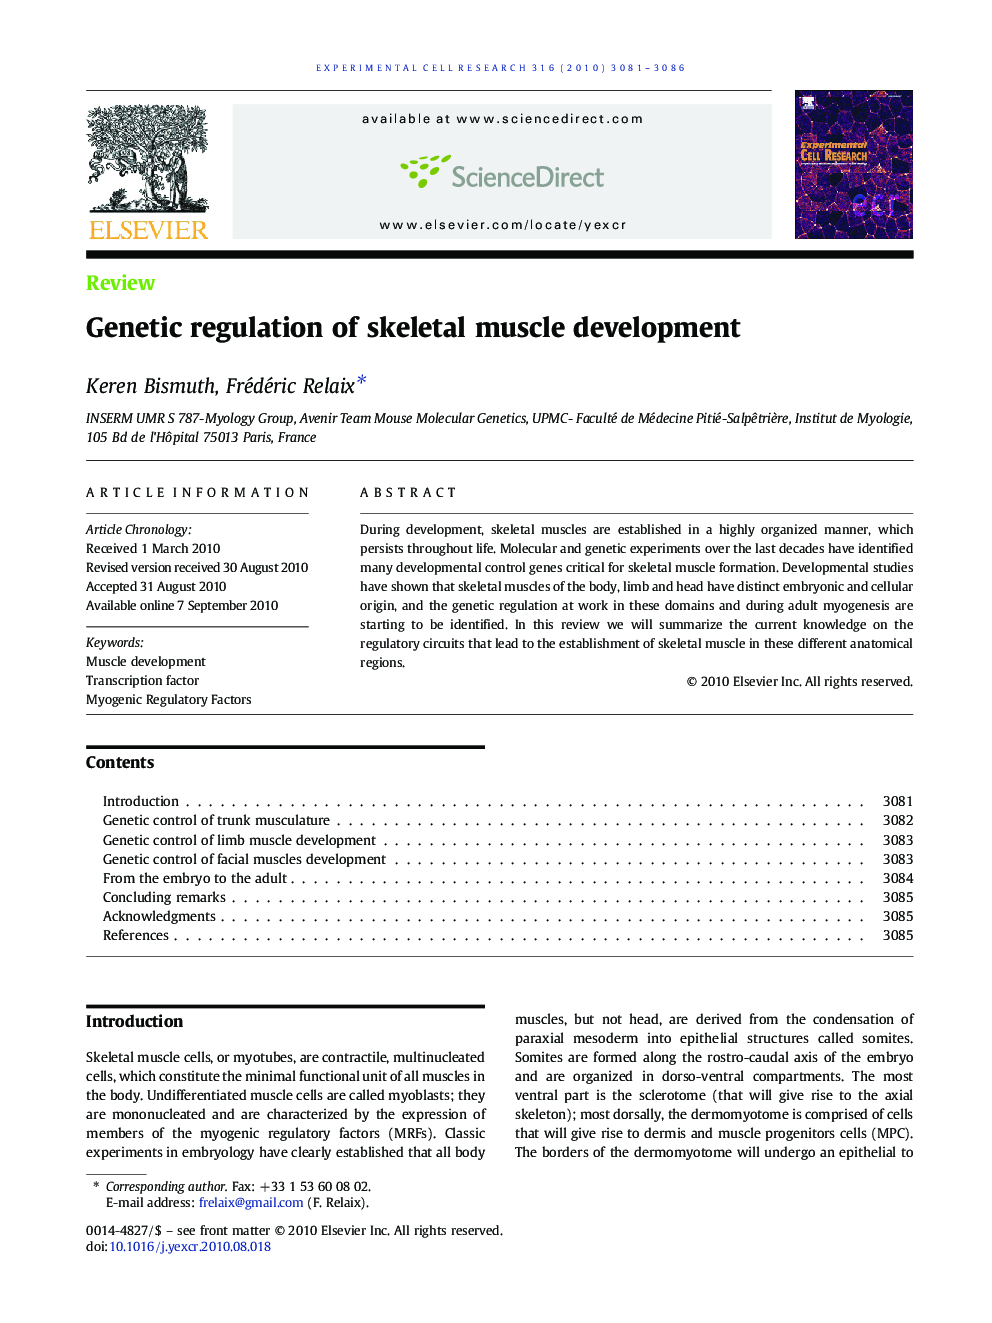 Genetic regulation of skeletal muscle development